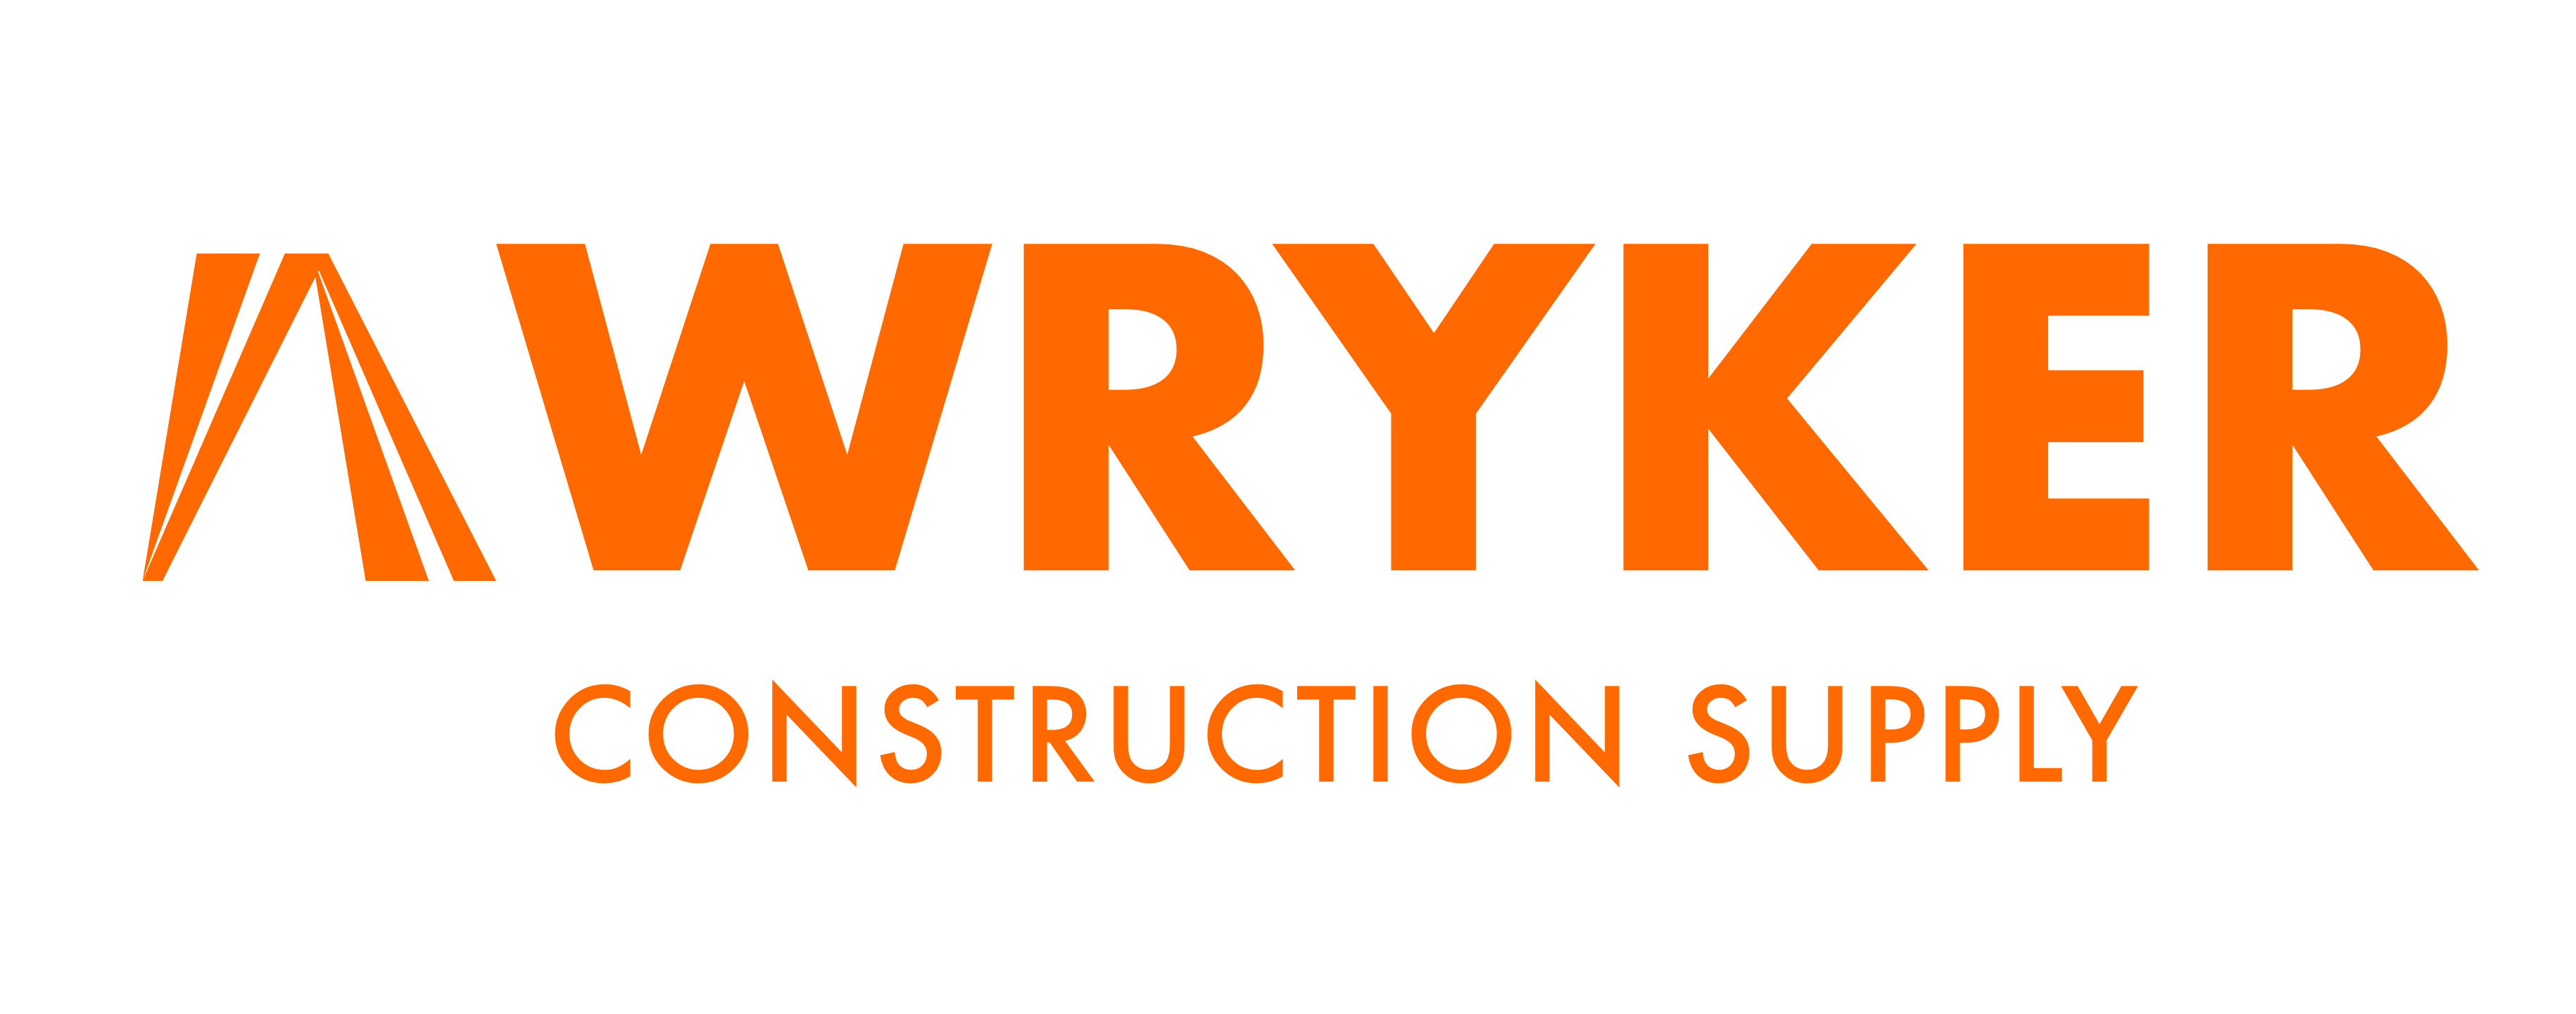 Wryker Construction Supply Logo